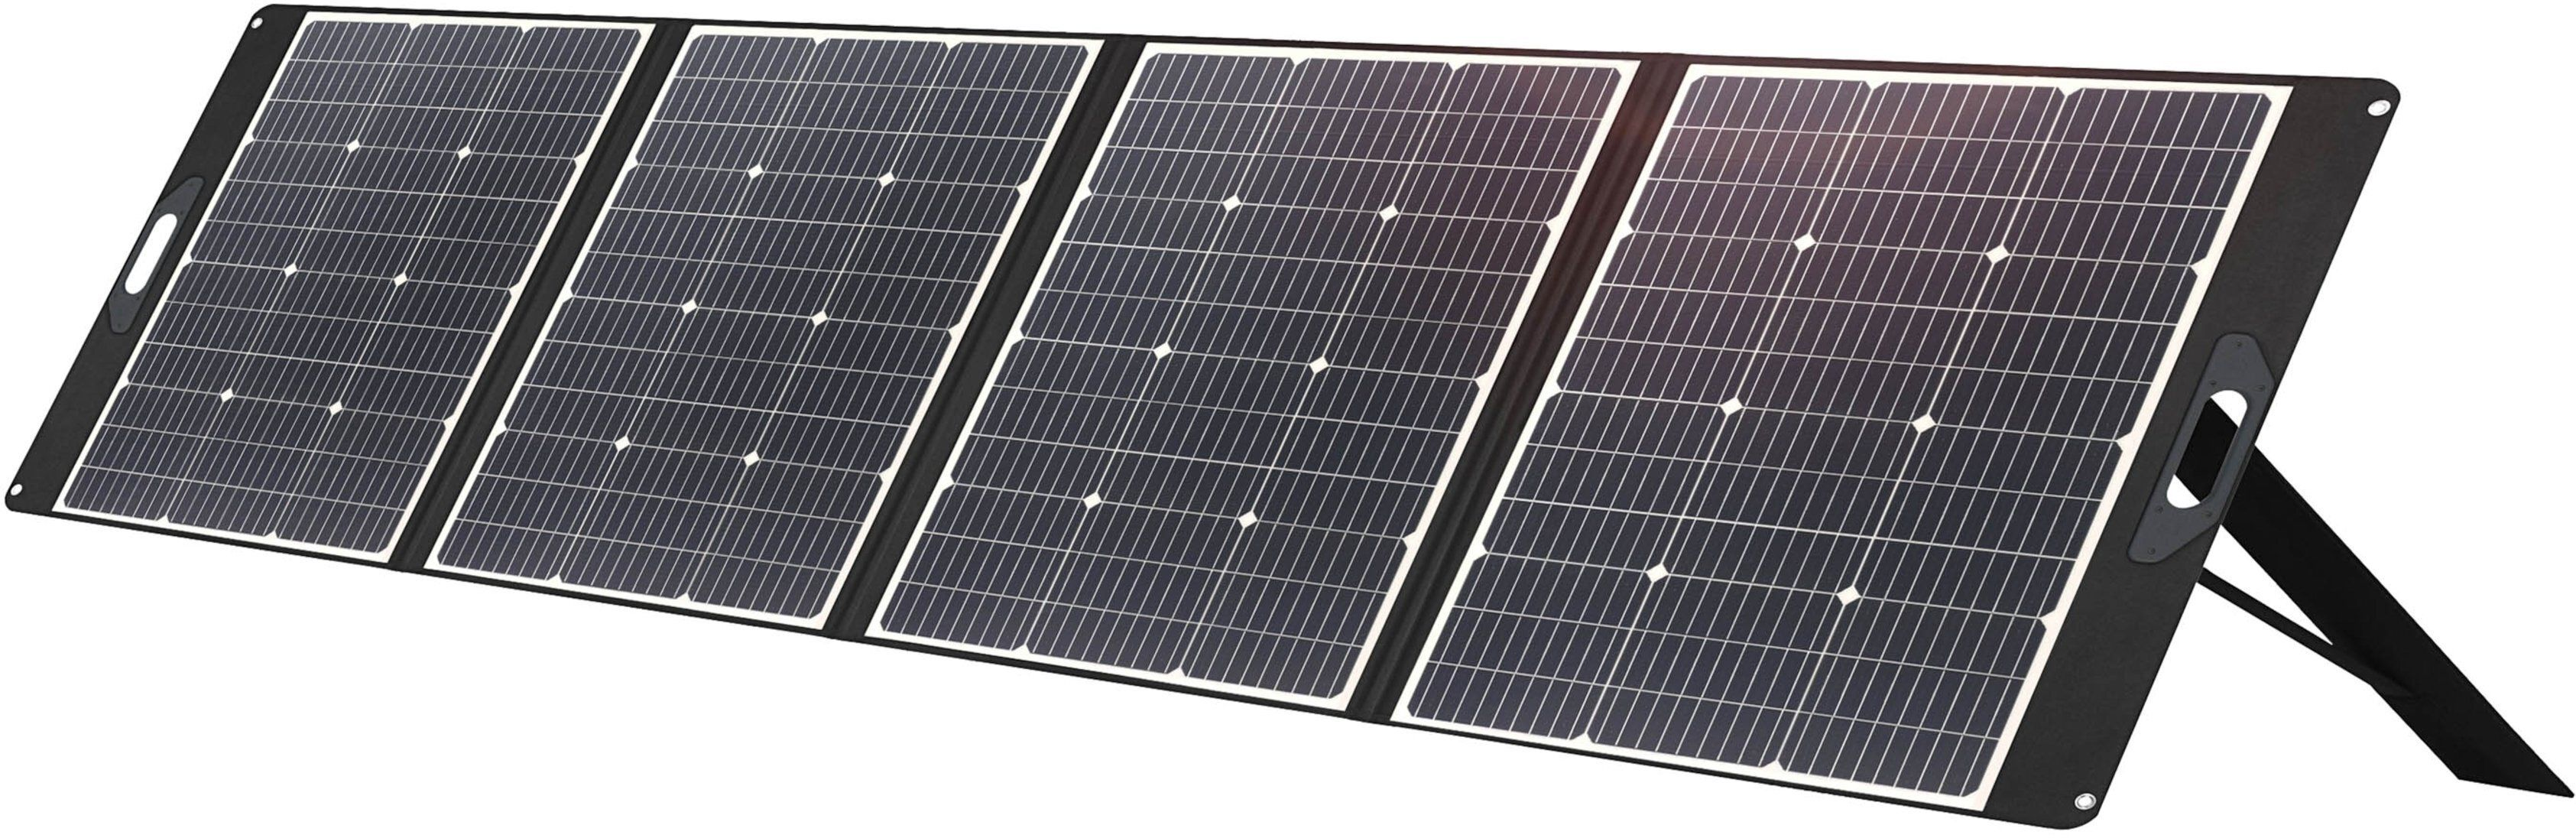 Портативная зарядная станция Segway CUBE 1000, 2584W, 1024Wh + солнечная панель 2E 300 Вт (AA.13.04.02.0004-SET300) фото 3